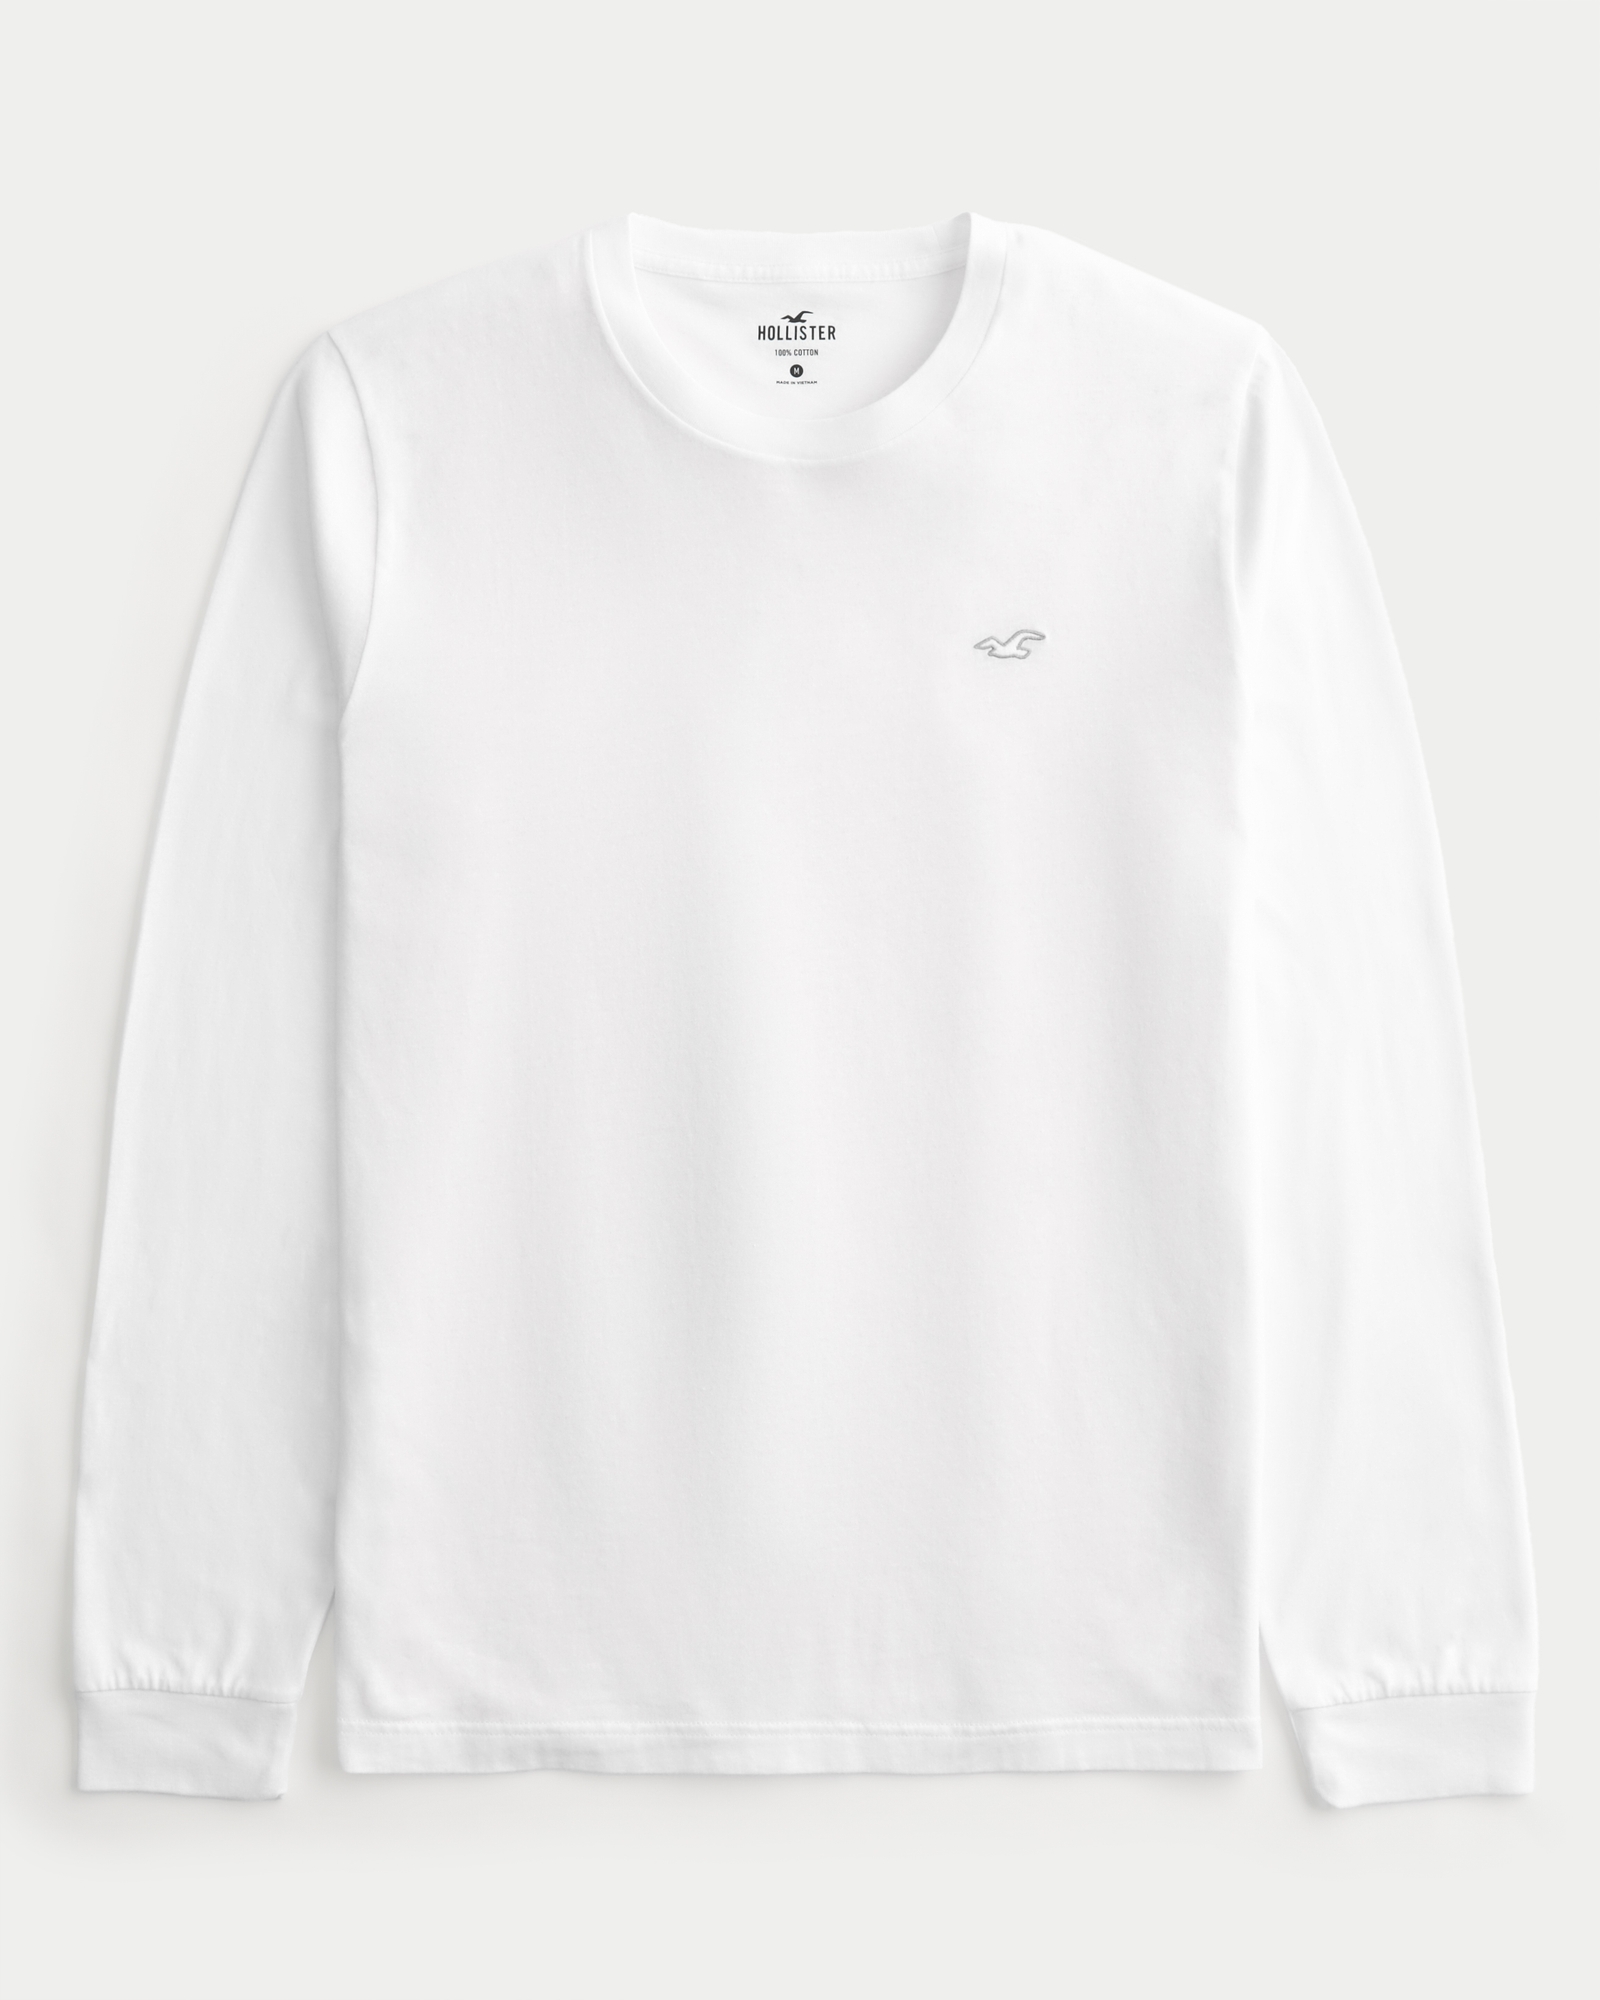 Hollister Long Sleeve T-Shirt - JAM Clothing